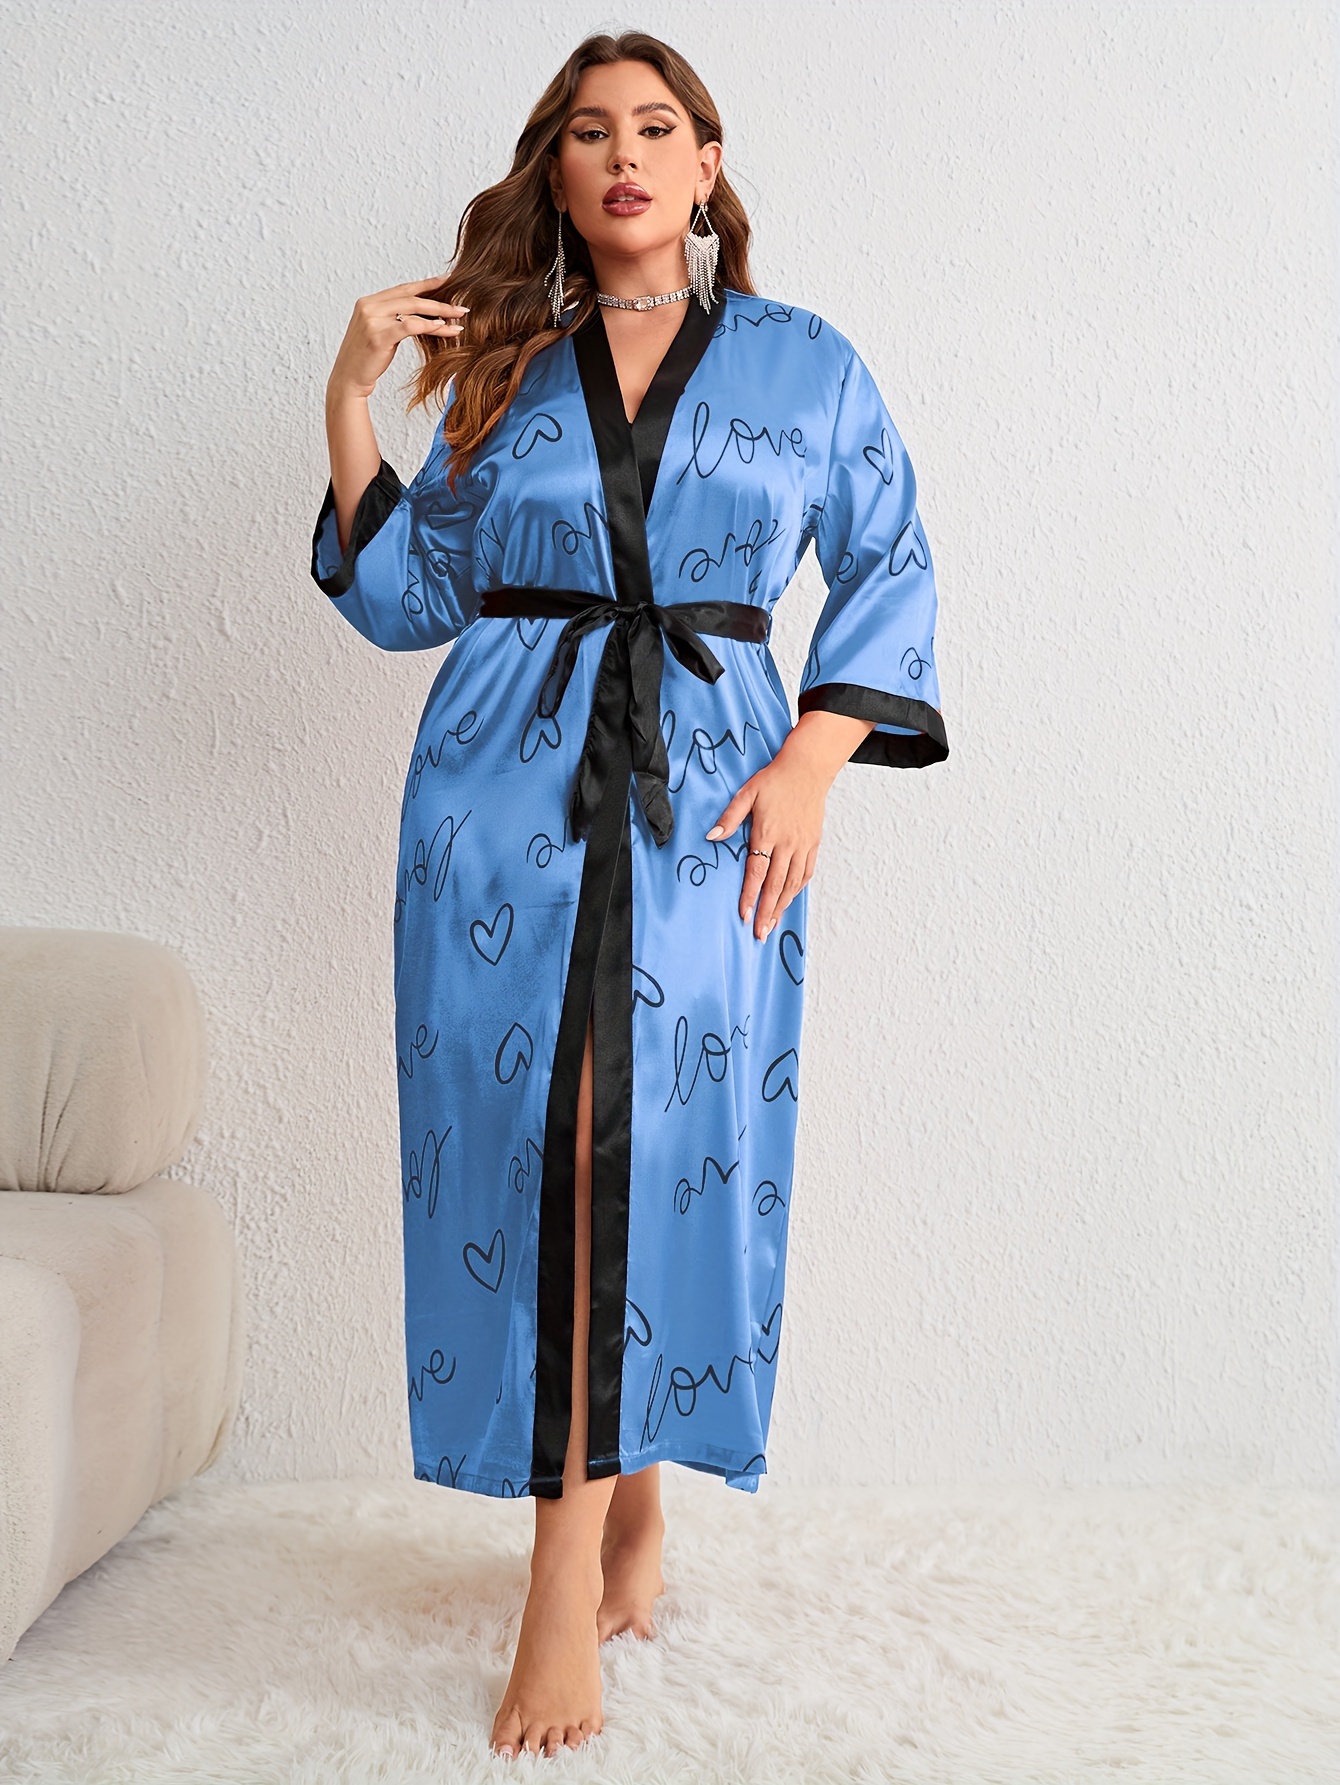 Sexy Lingerie V Neck Night Dress Women Nightgown Pijamas Heart Print  Sleepwear